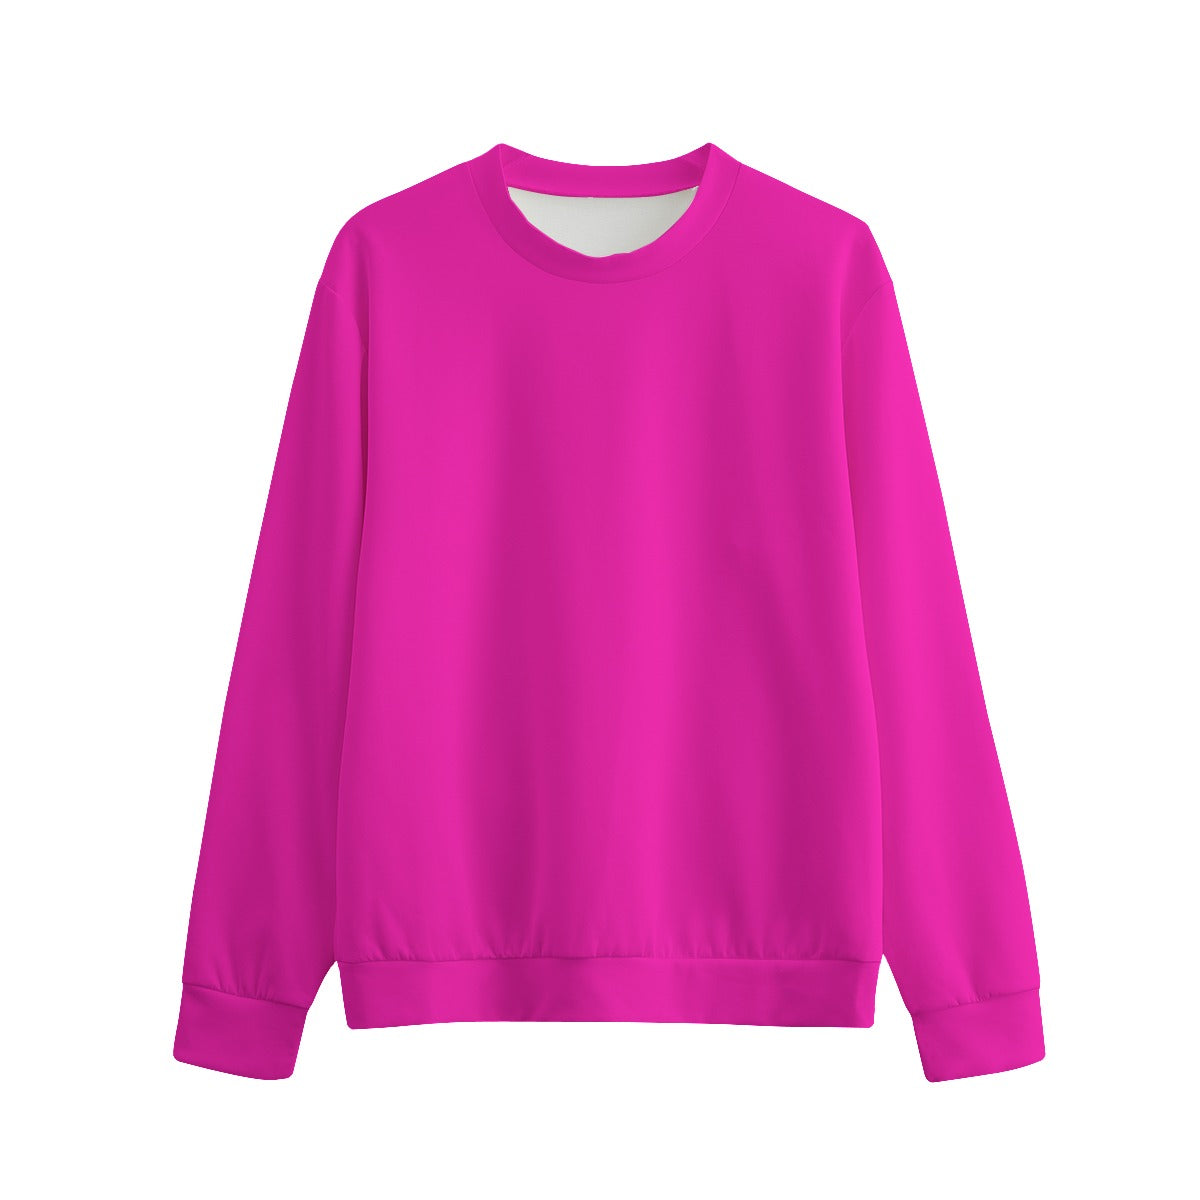 TGC FASHION Hot Pink Men's O-neck Sweatshirt | 300GSM Cotton